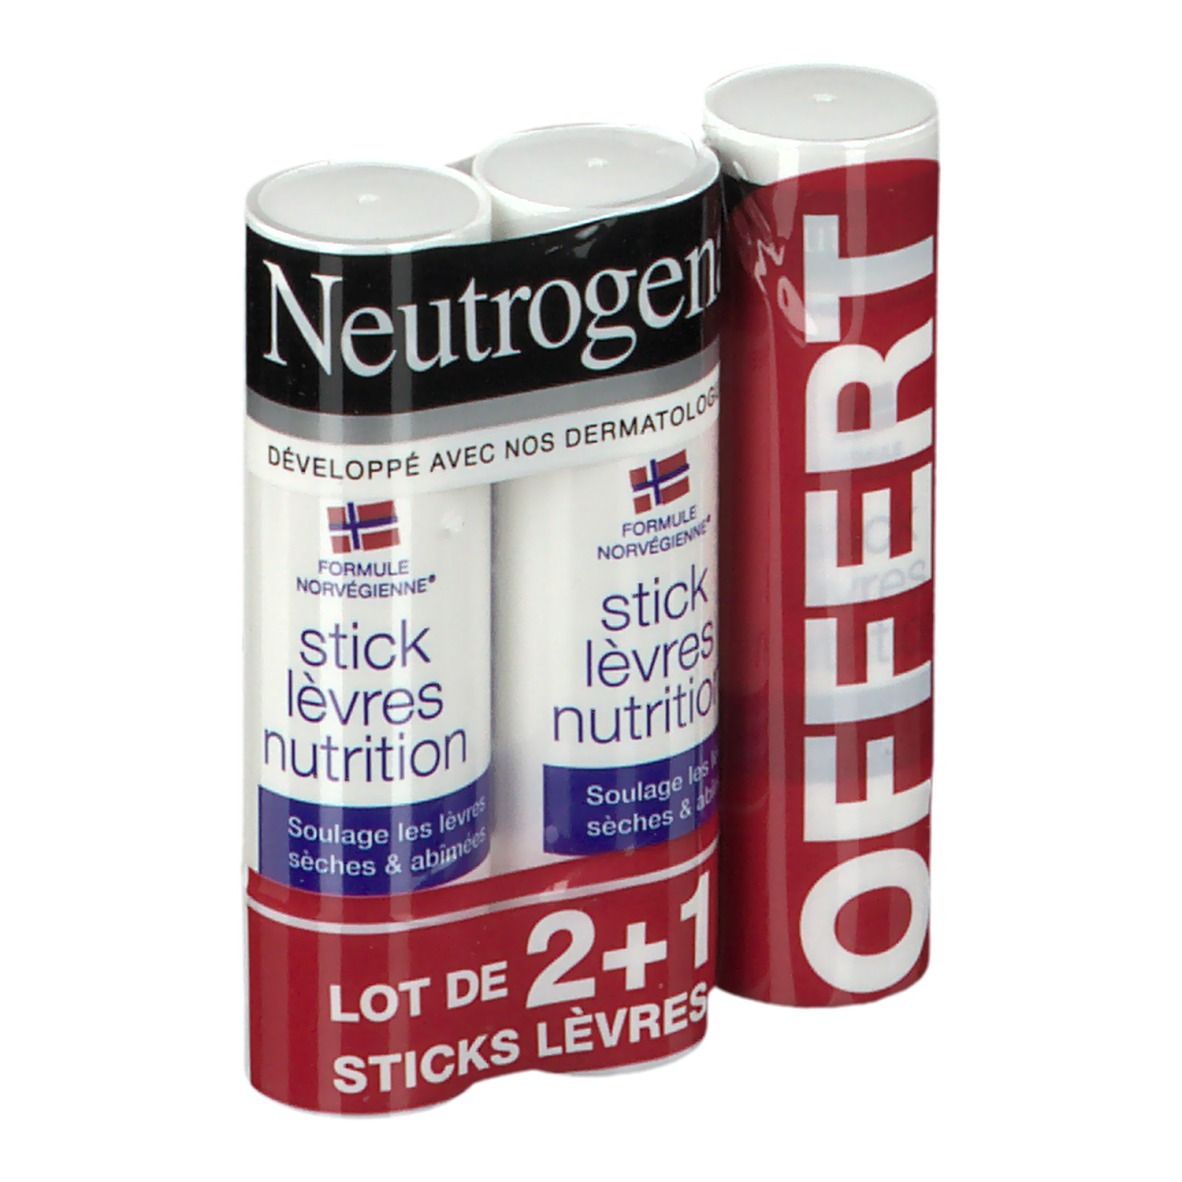 Neutrogena soin des lèvres